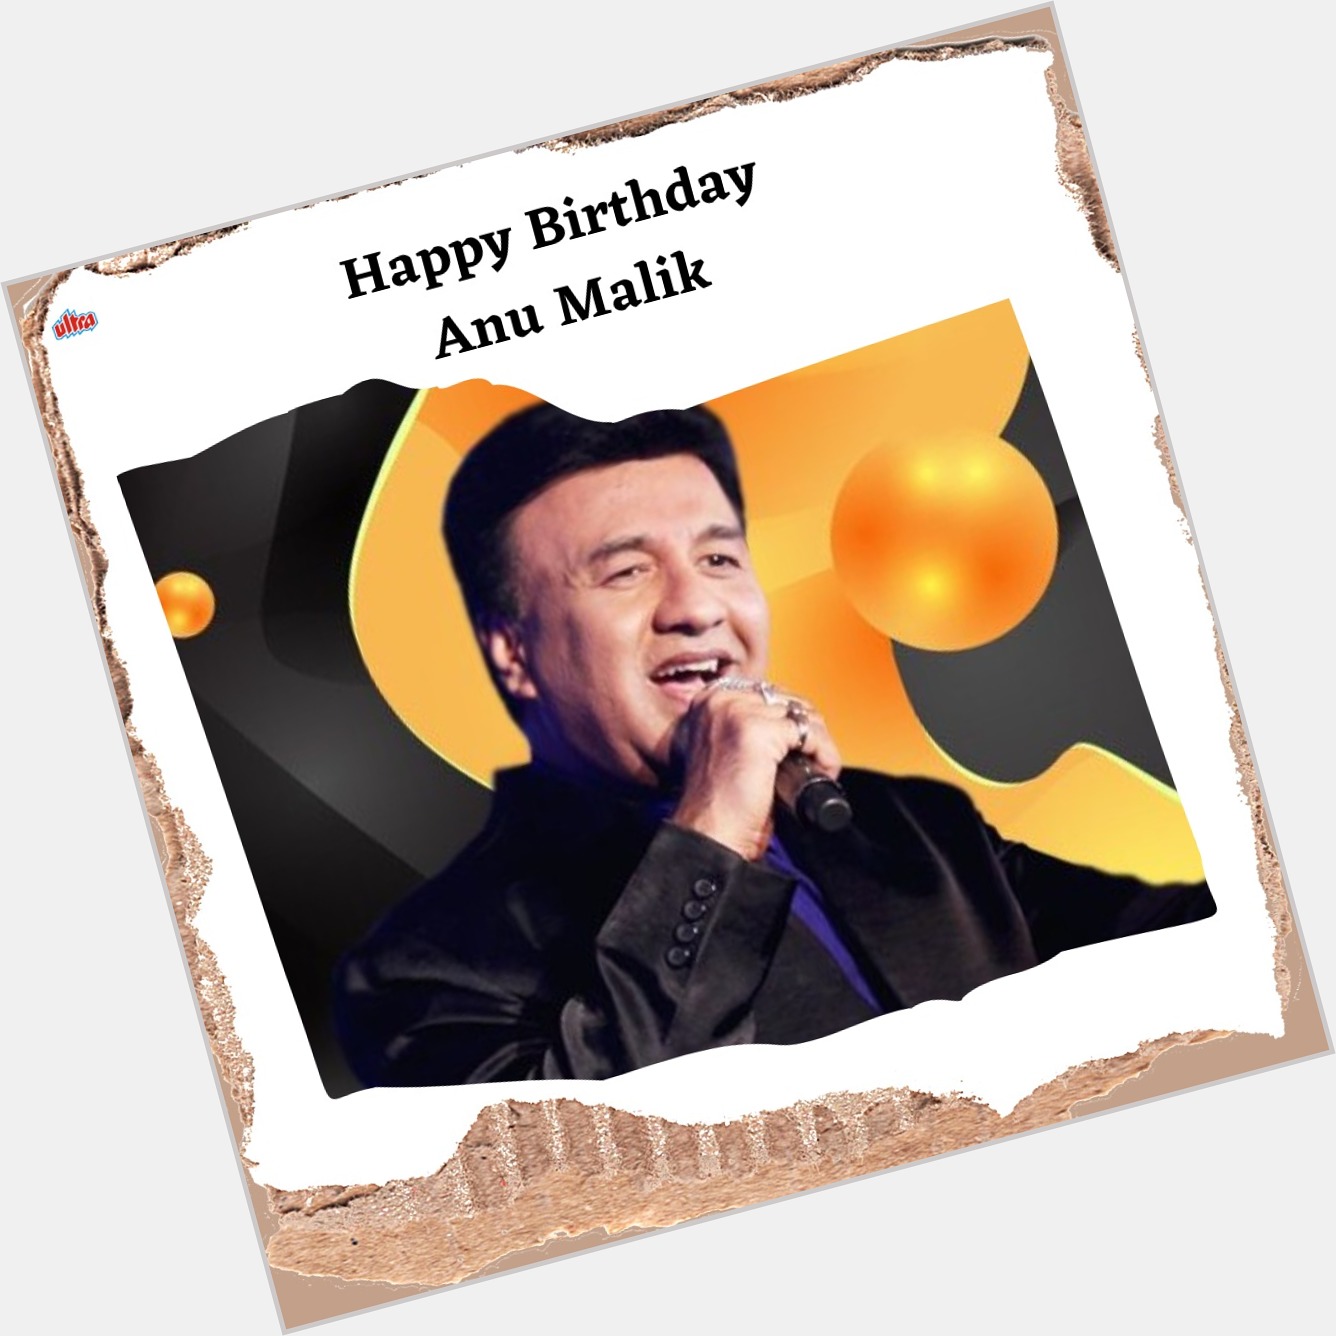 Happy Birthday Anu Malik    